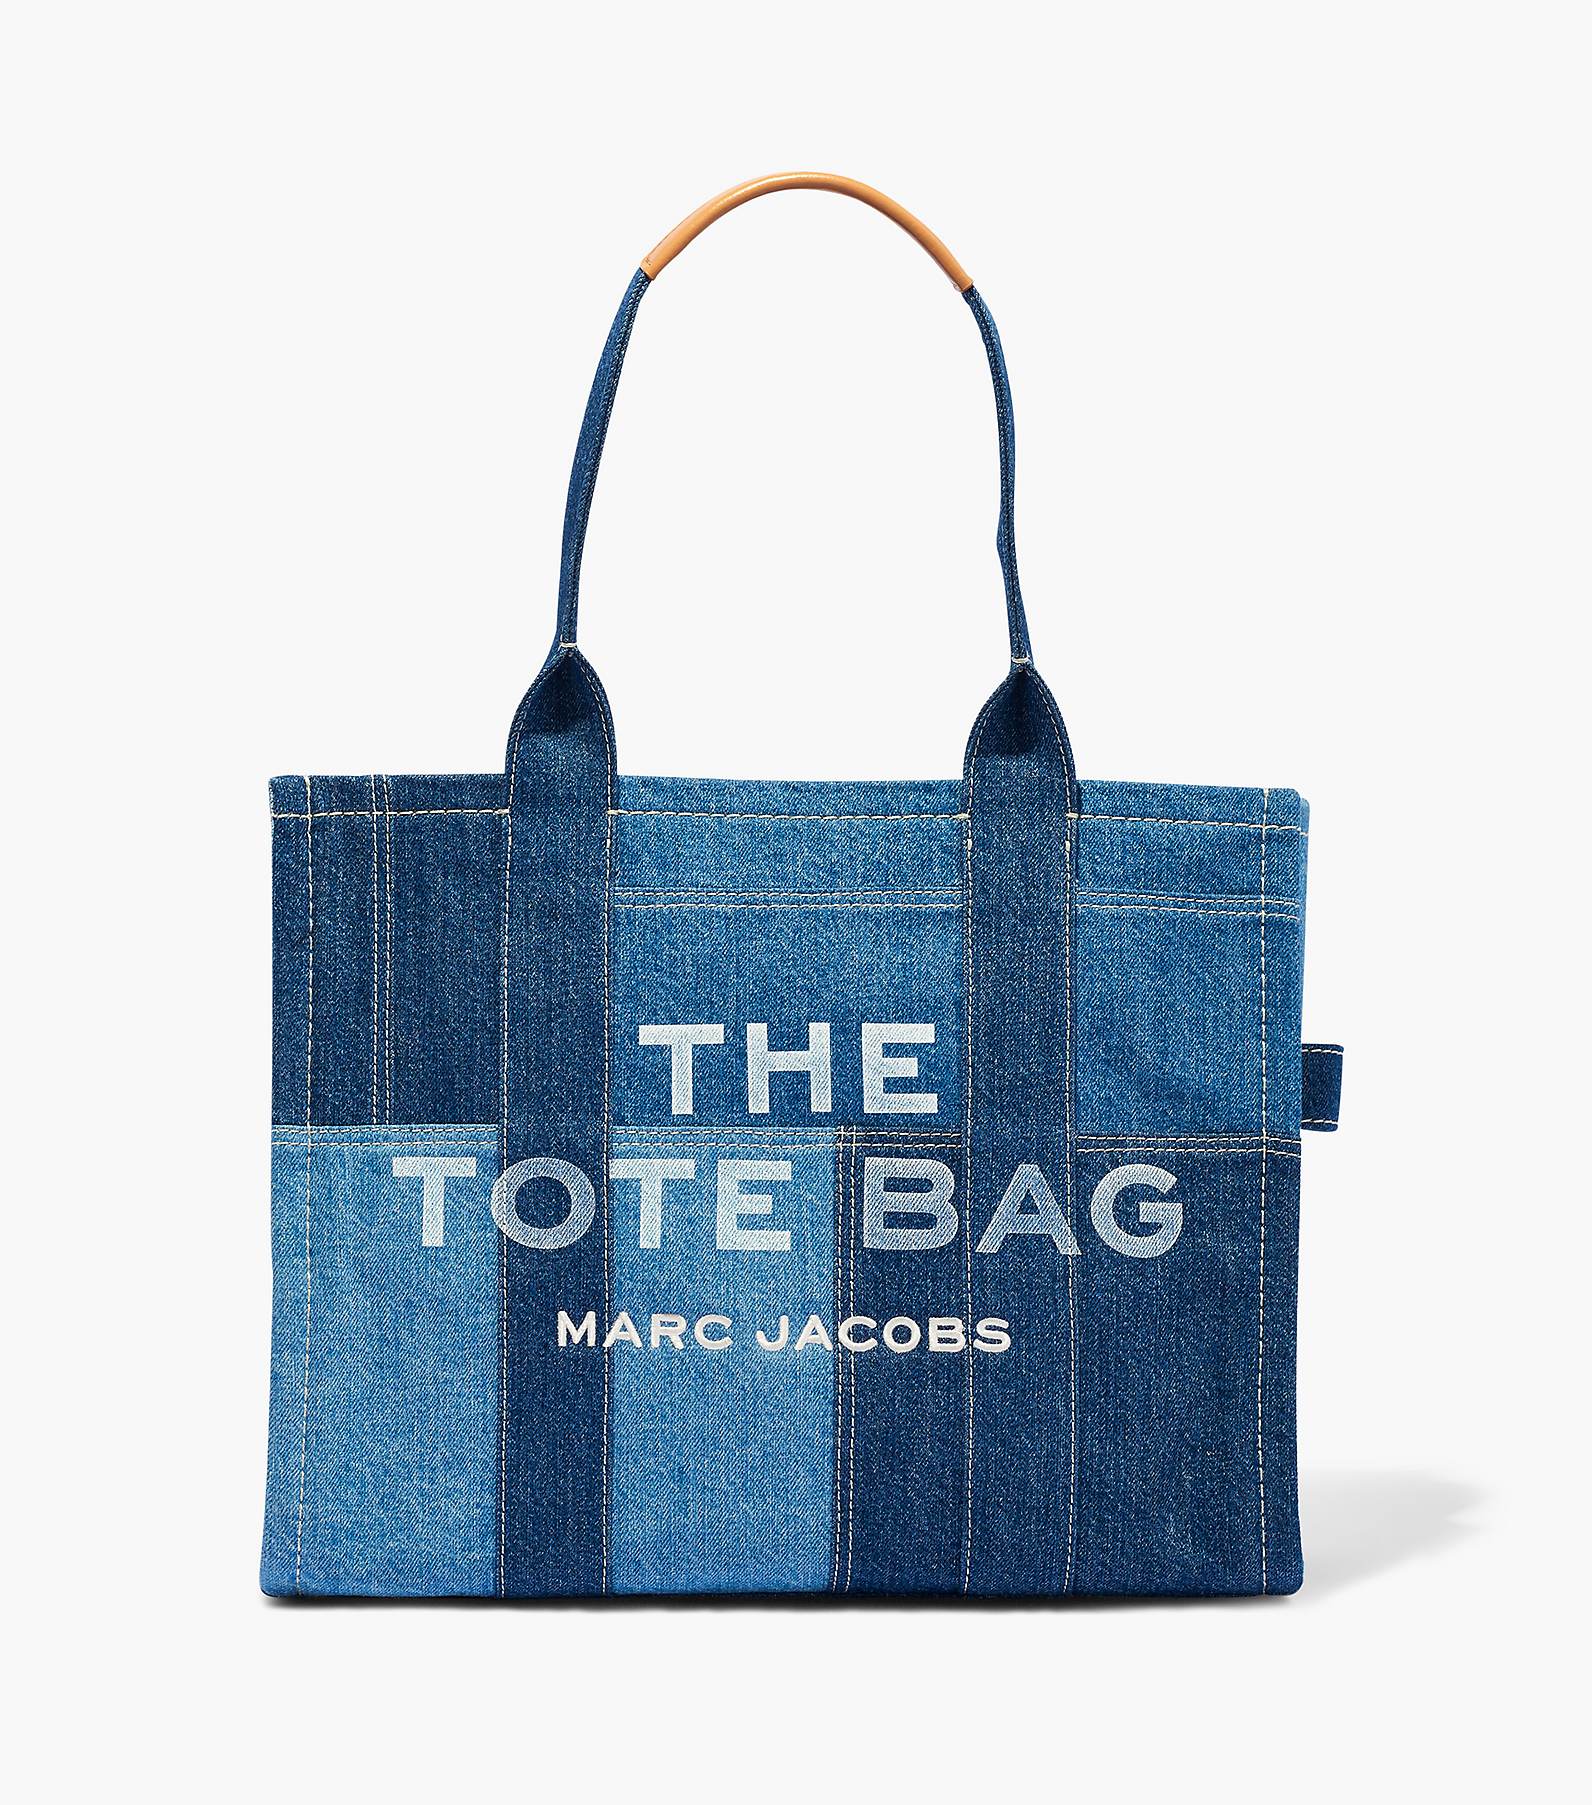 Set Designer Bag The Christmas Box Shoulder Bag Tote Bag Crossbody